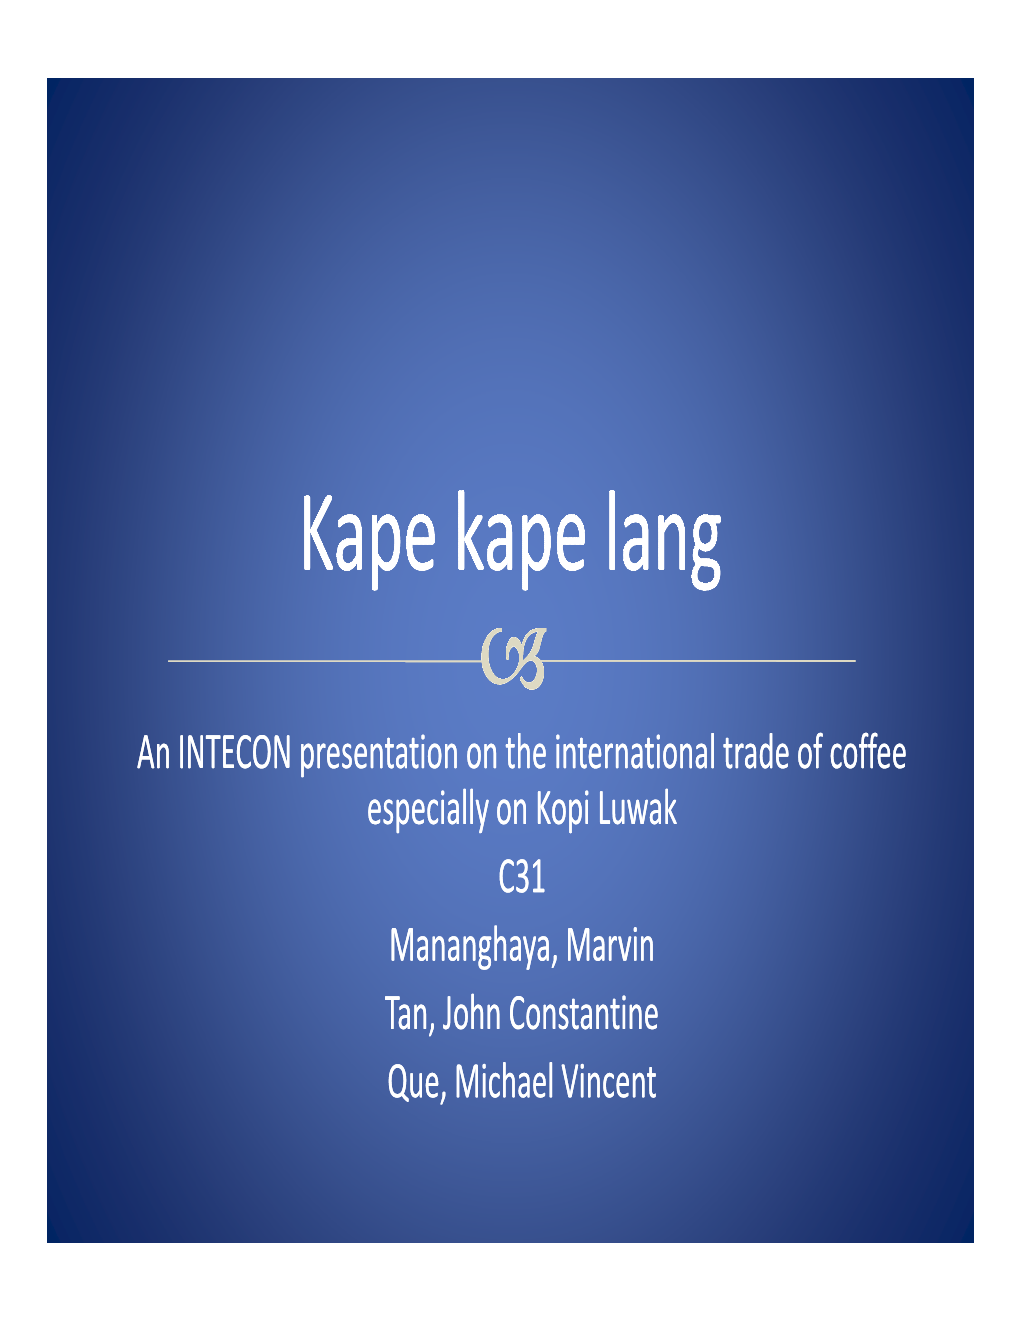 An INTECON Presentation on the International Trade of Coffee